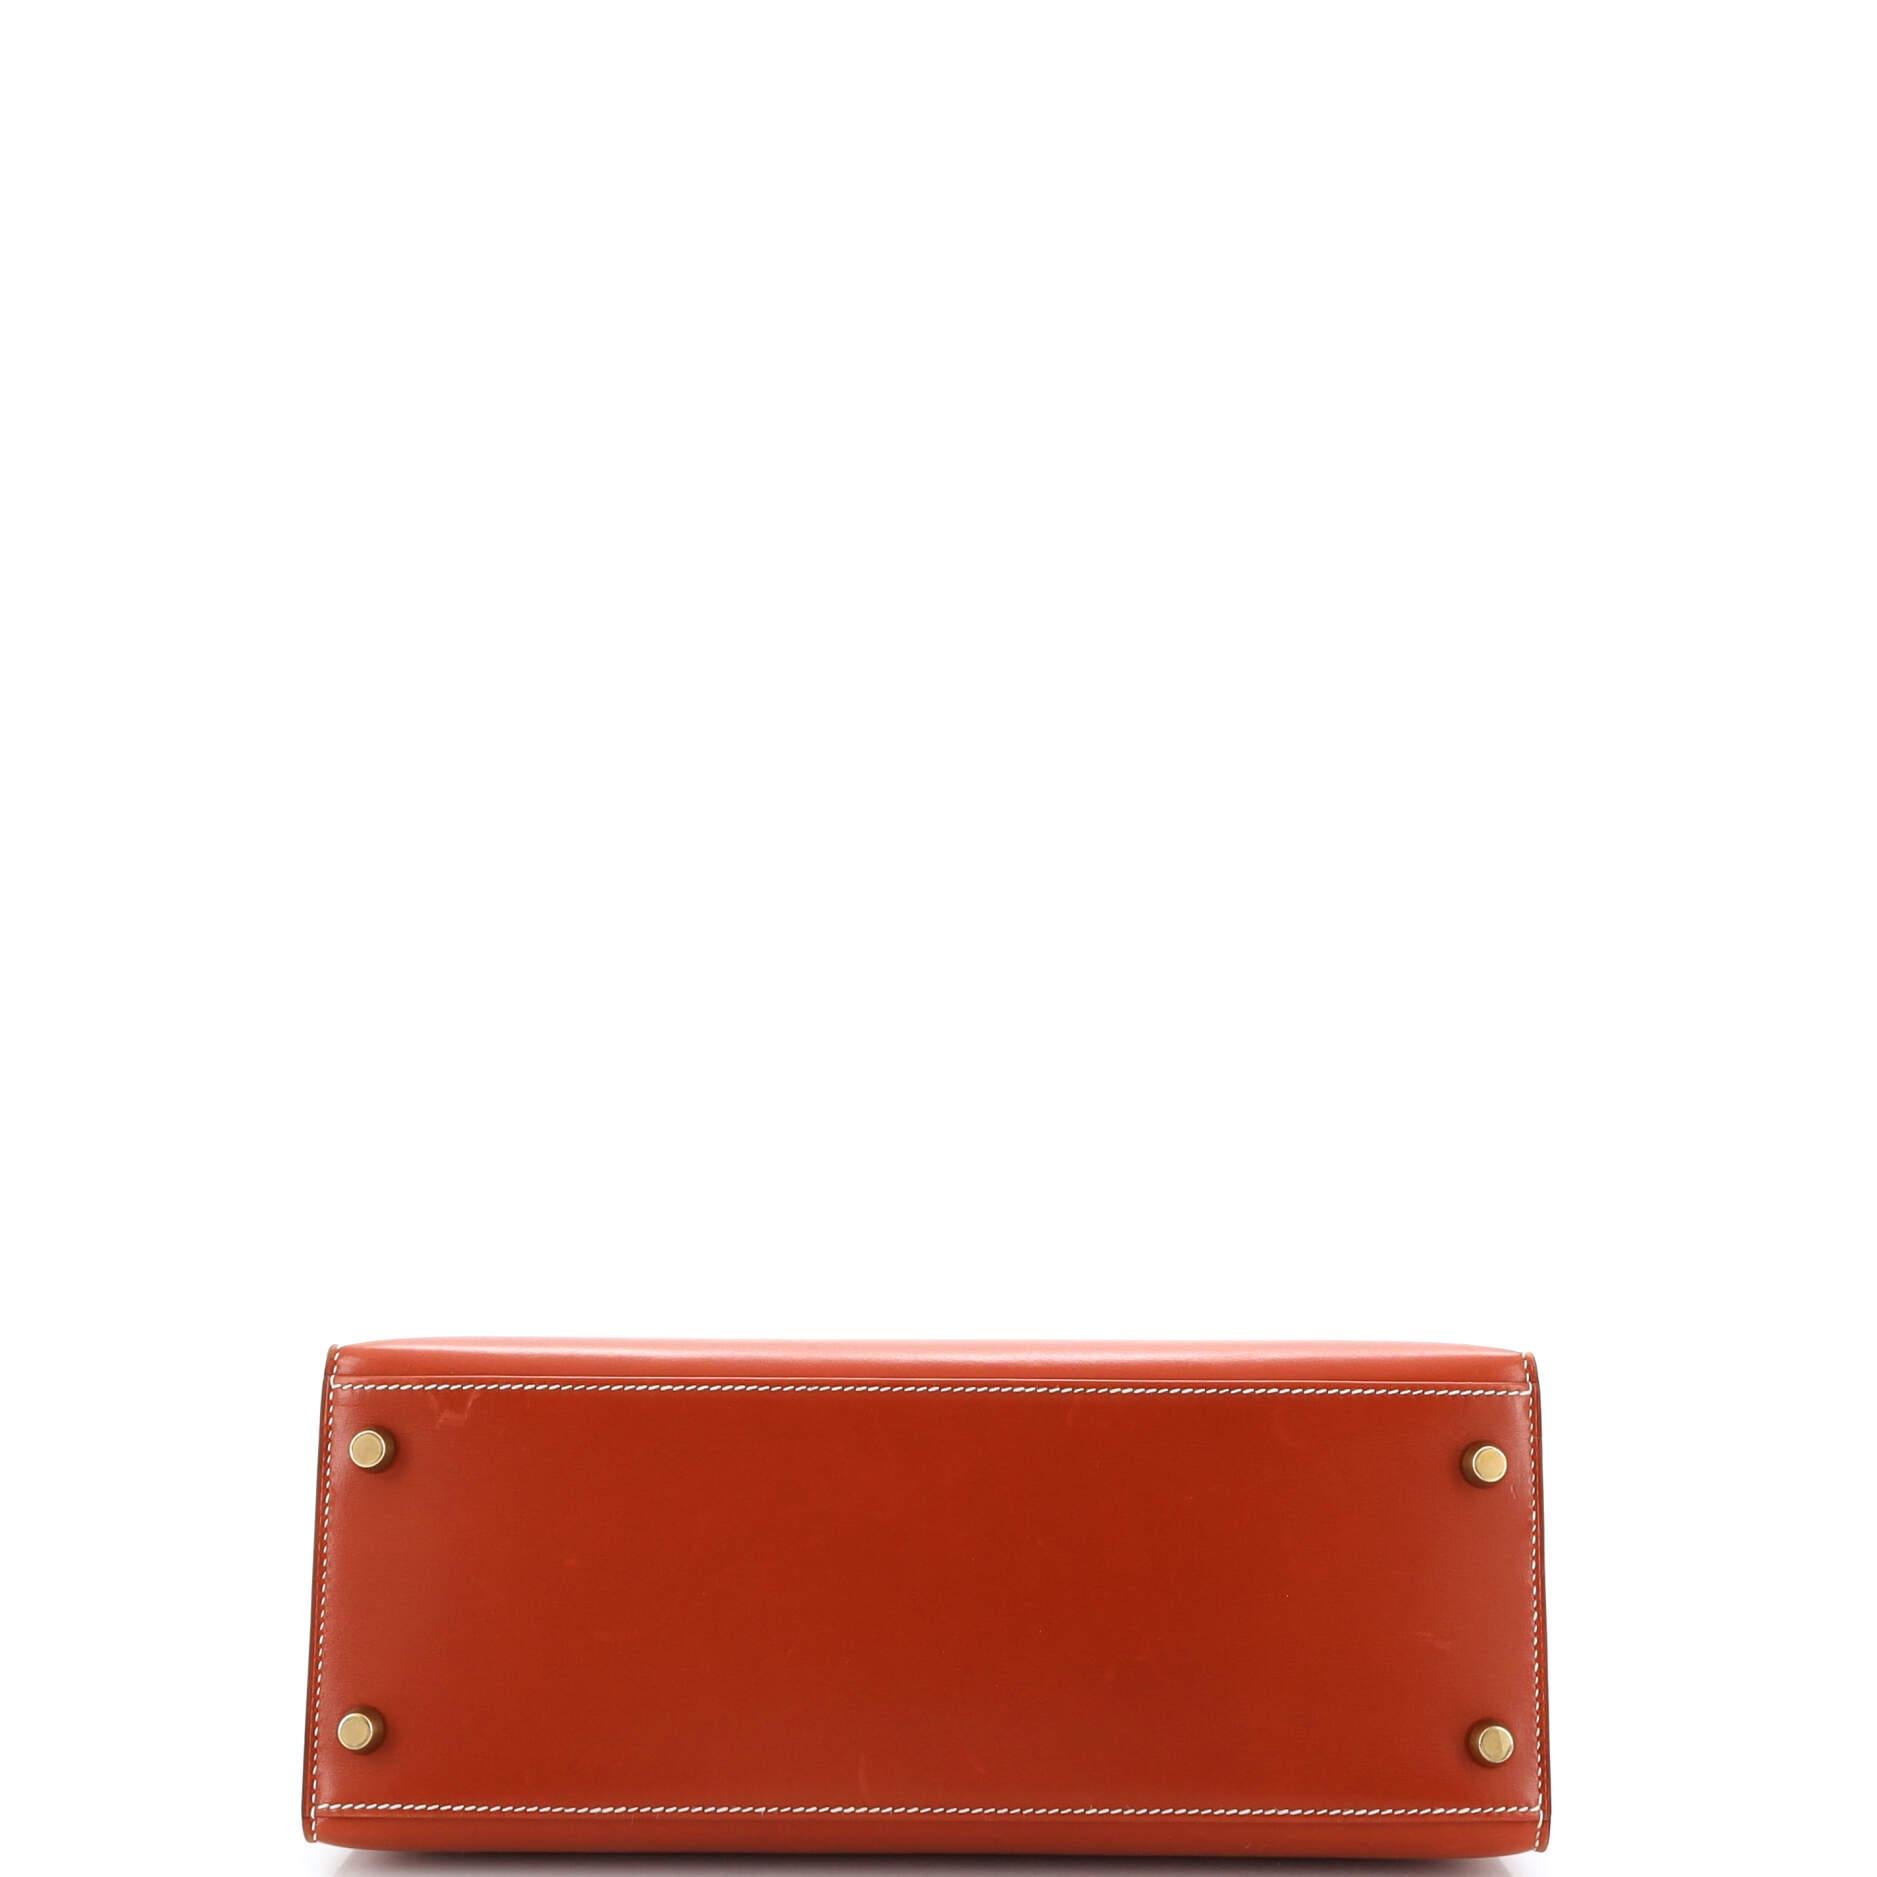 Women's Hermes Kelly Handbag Brique Box Calf with Gold Hardware 28